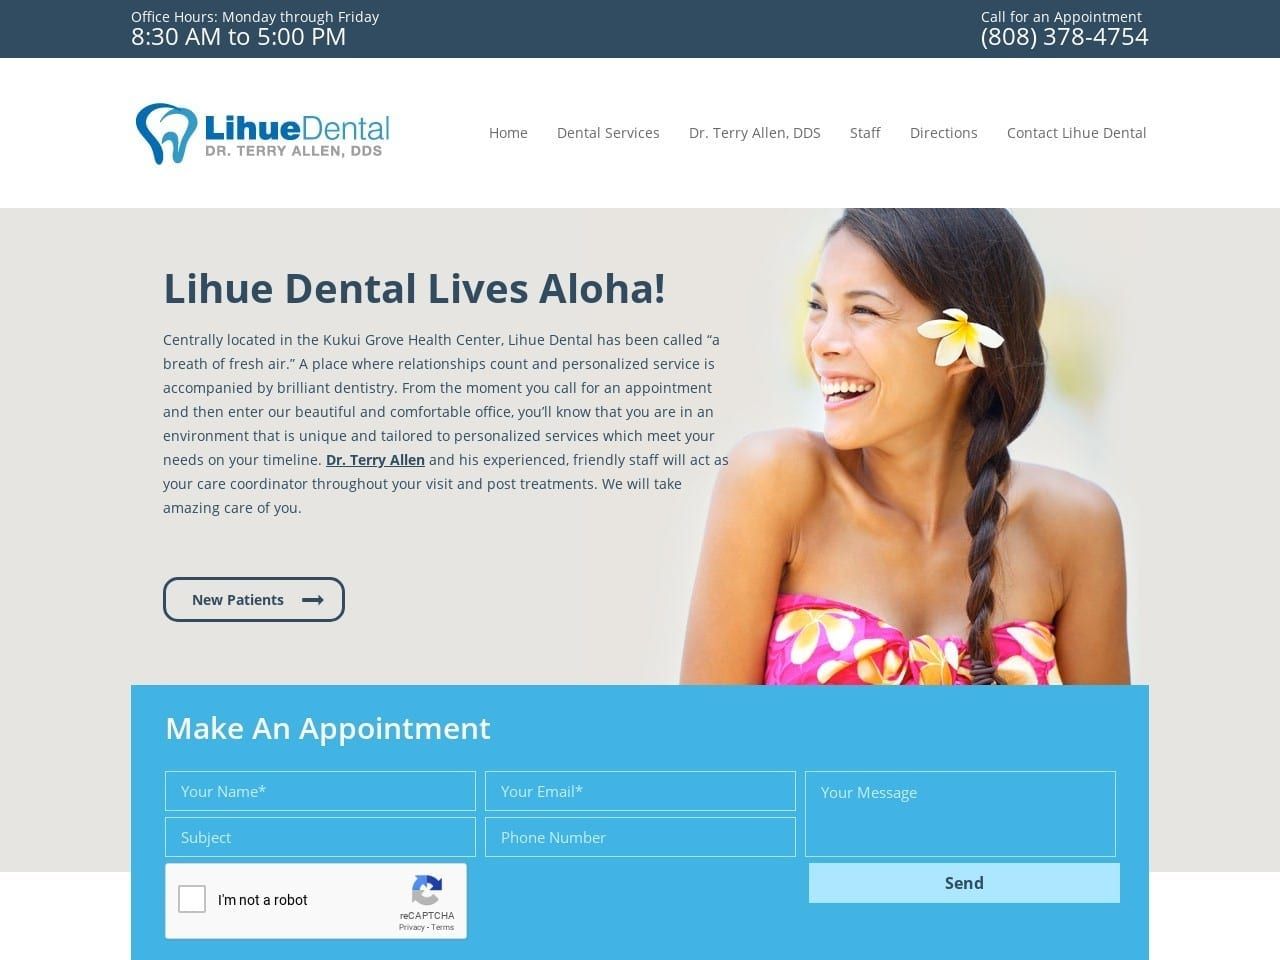 Lihue Dental Website Screenshot from lihue.dental